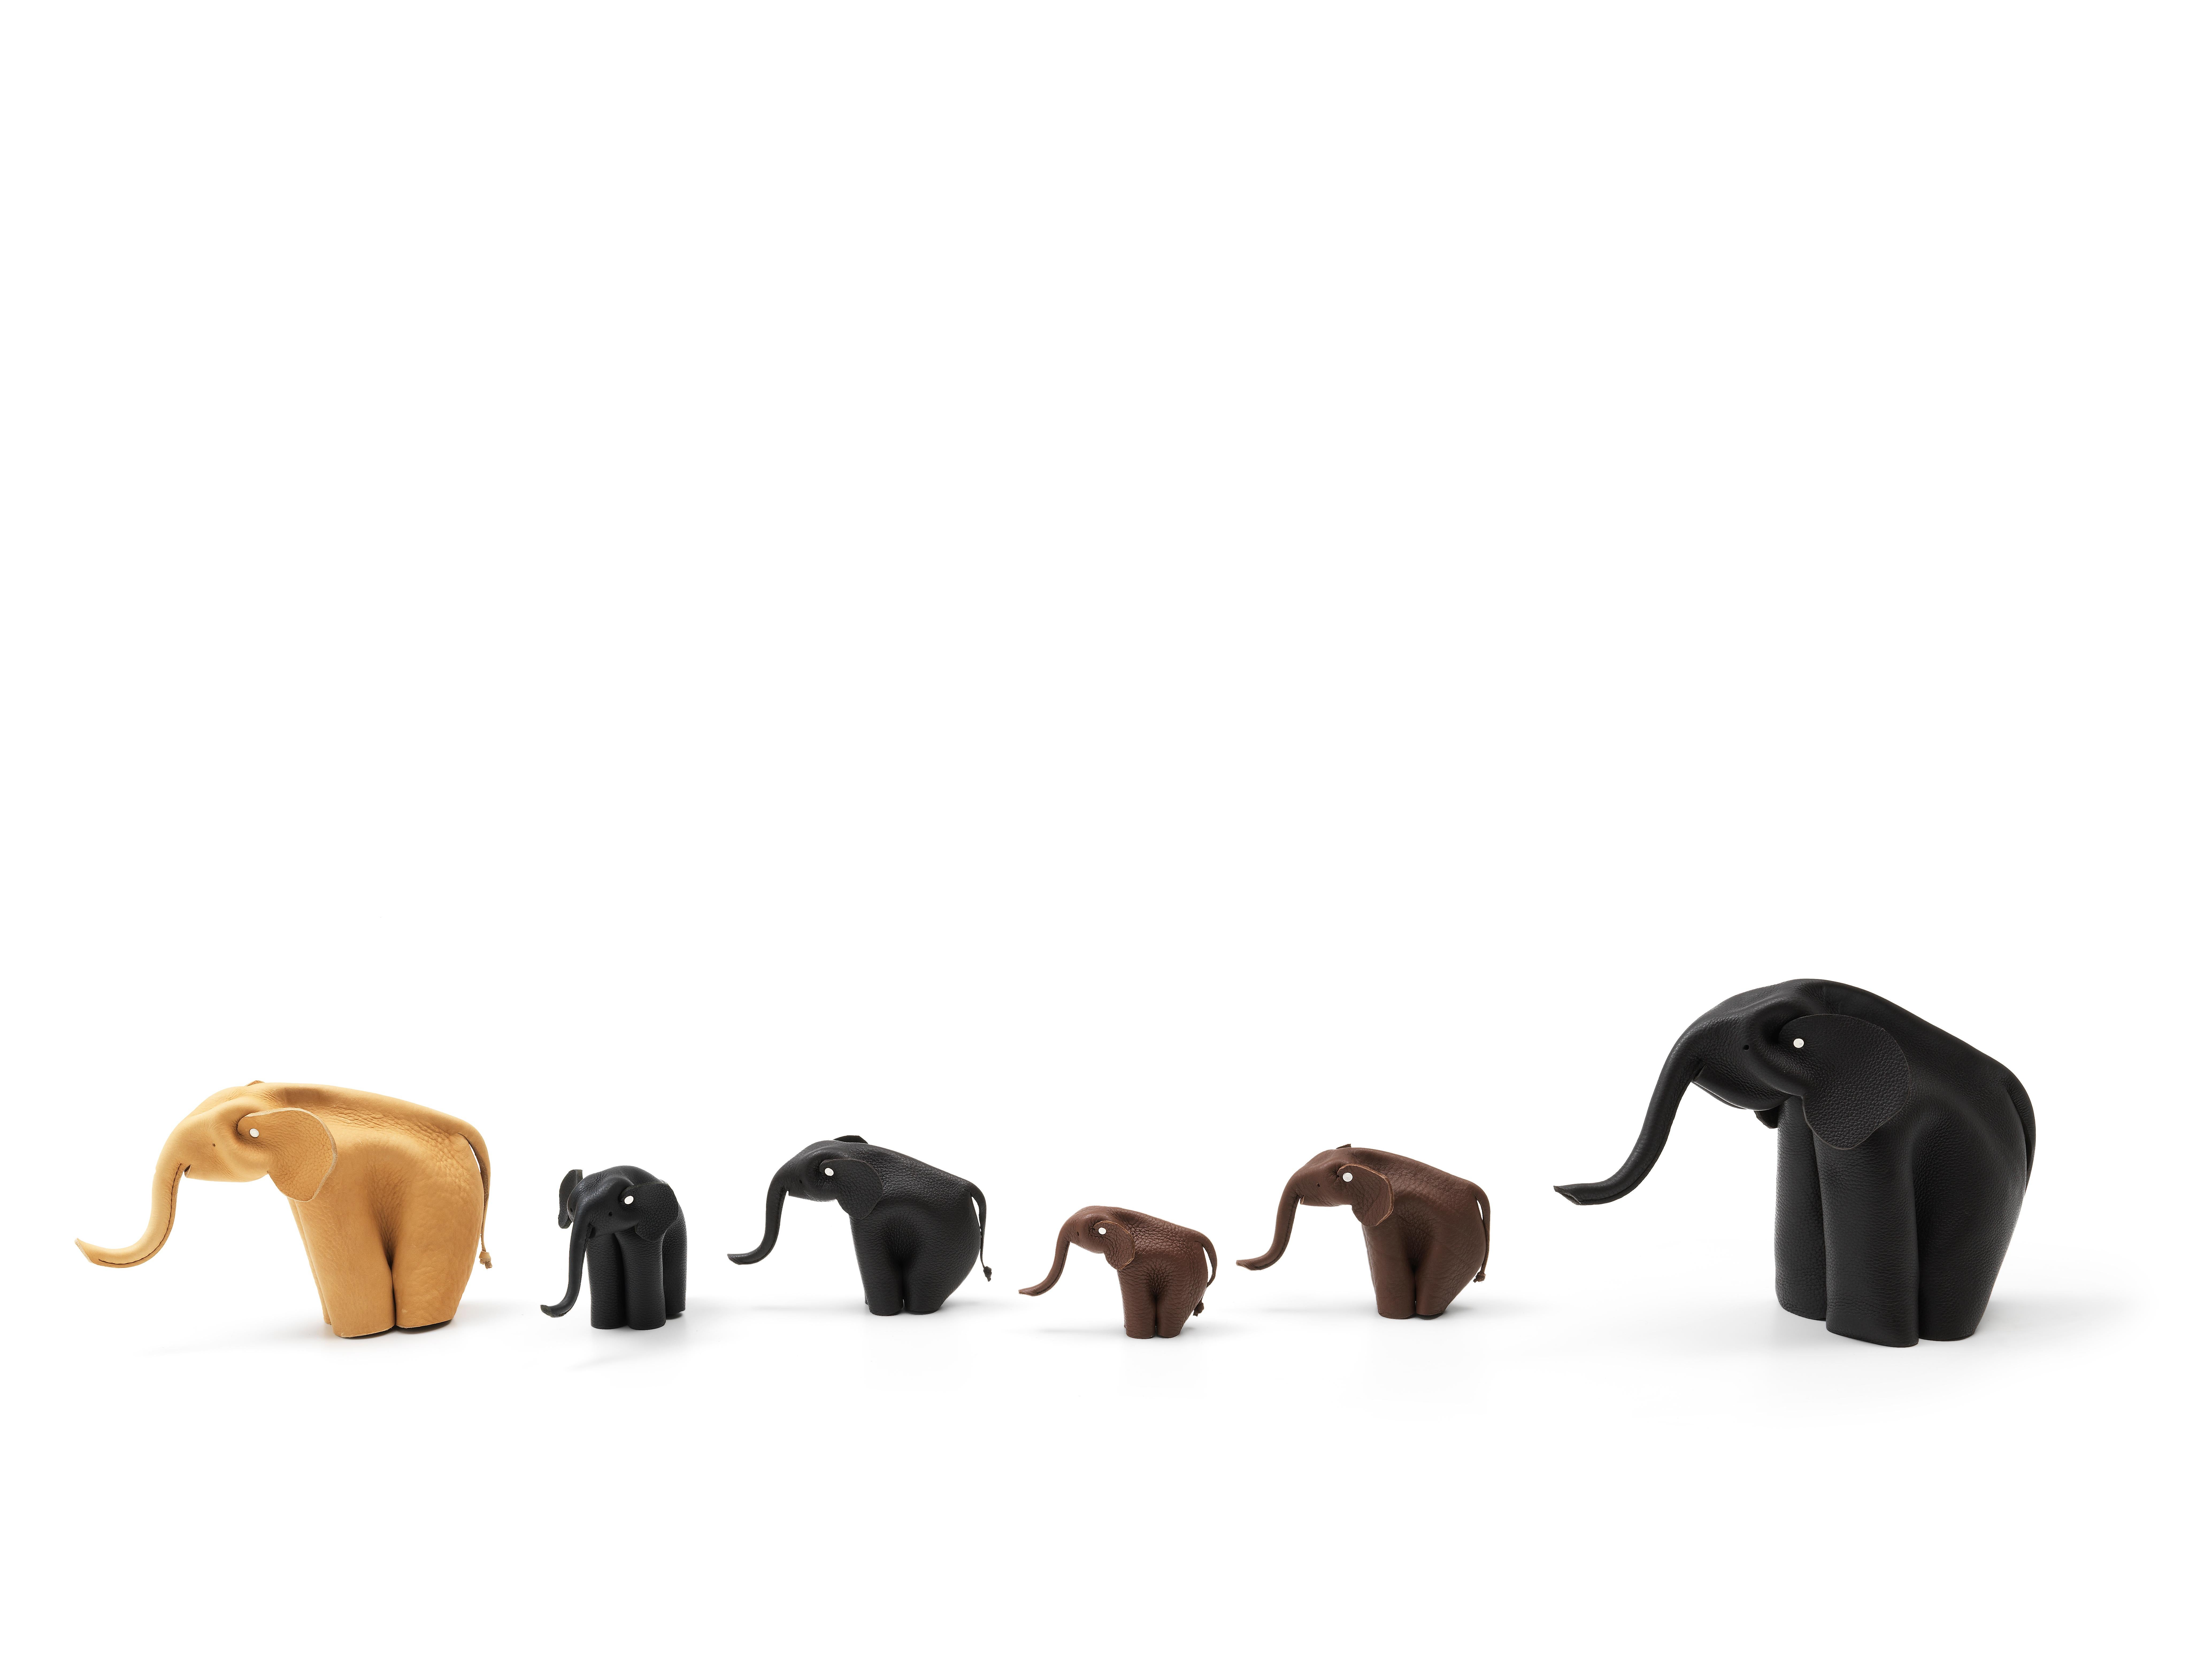 Miniature toy elephant accessory designed by Alfredo Ha¨berli for De Sede.